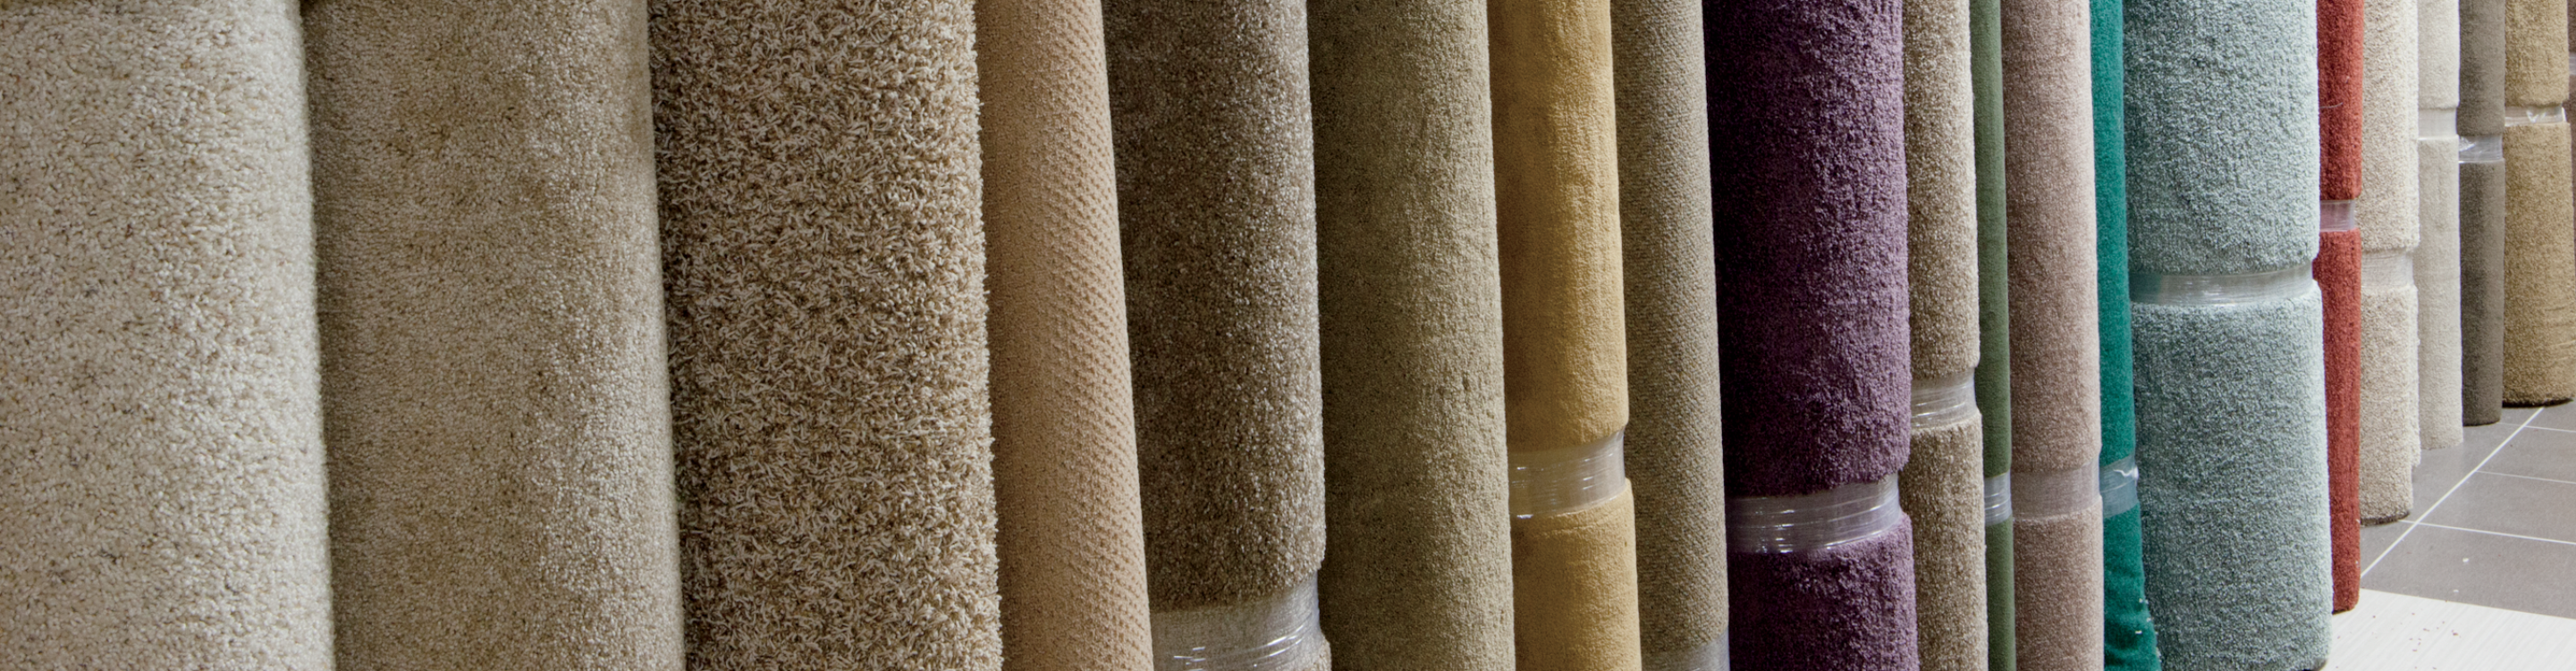 Carpet remnants carpet rolls in different colors